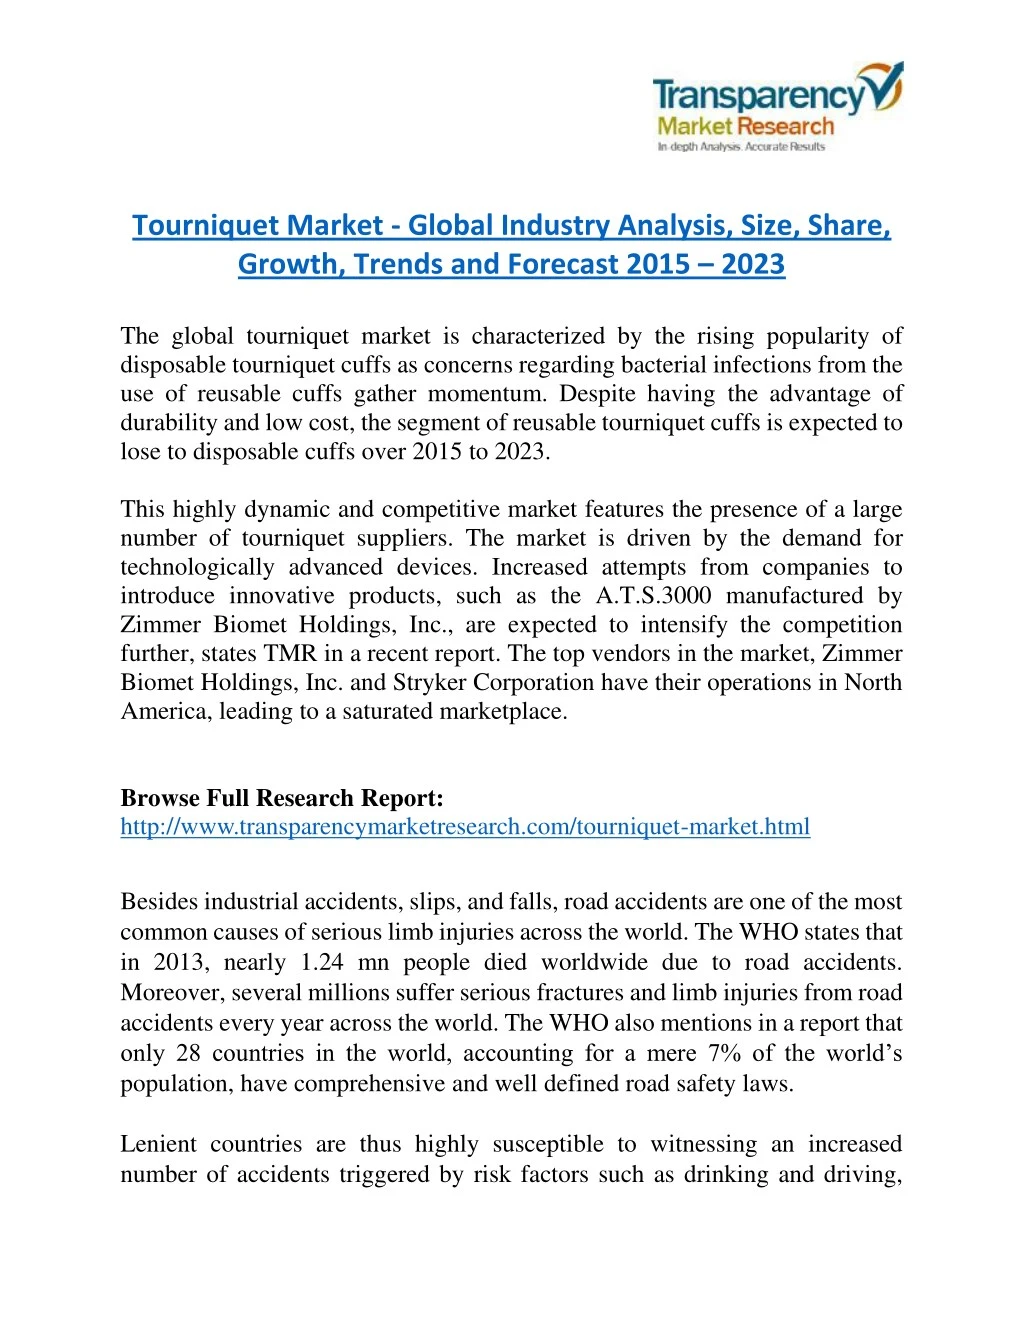 tourniquet market global industry analysis size